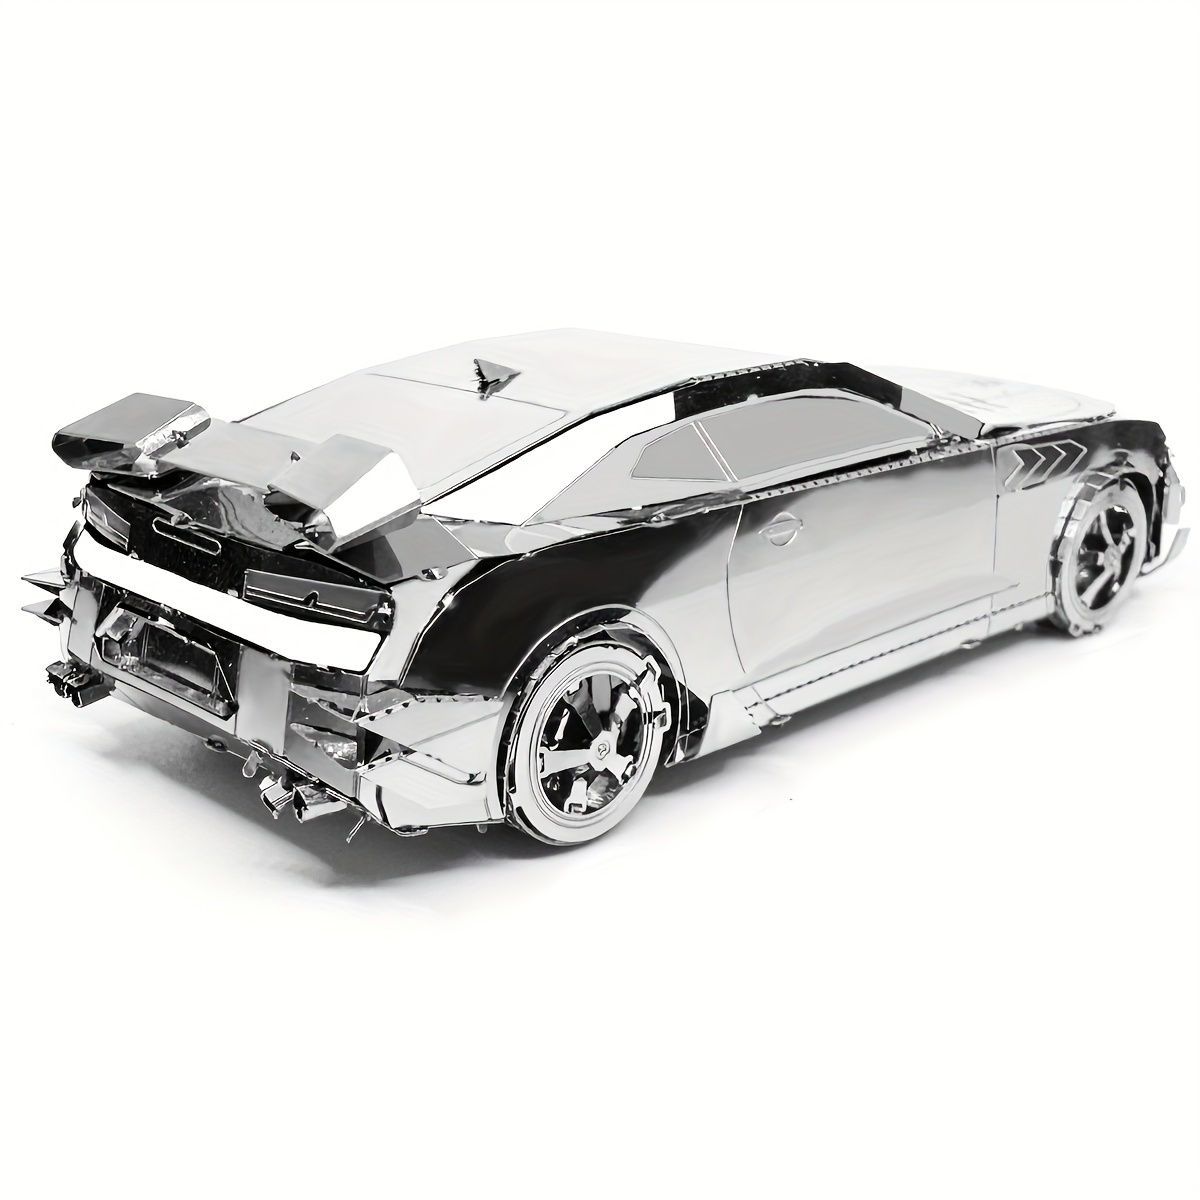  Model Car Kit 3D Model Kit, 3D Puzzle for Adults - Metal DIY  Kit, Beautiful Metal Model Car Collectible